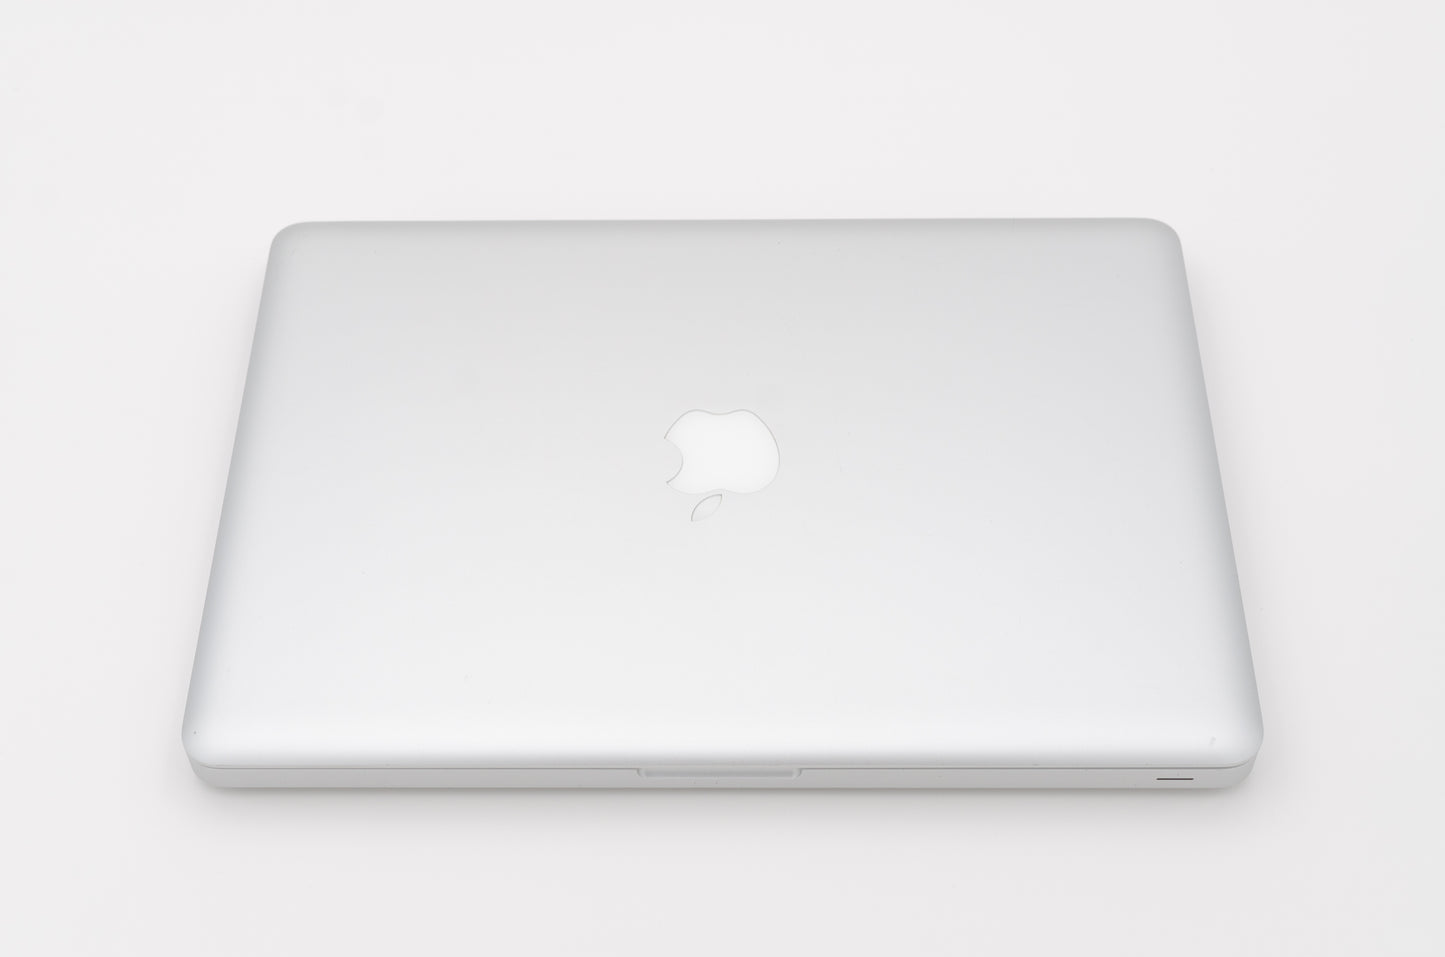 apple-mid-2010-13.3-inch-macbook-pro-a1278-aluminum-c2d - 2.4ghz processor, 4gb ram, 320m - 256mb gpu-mc374ll/a-3